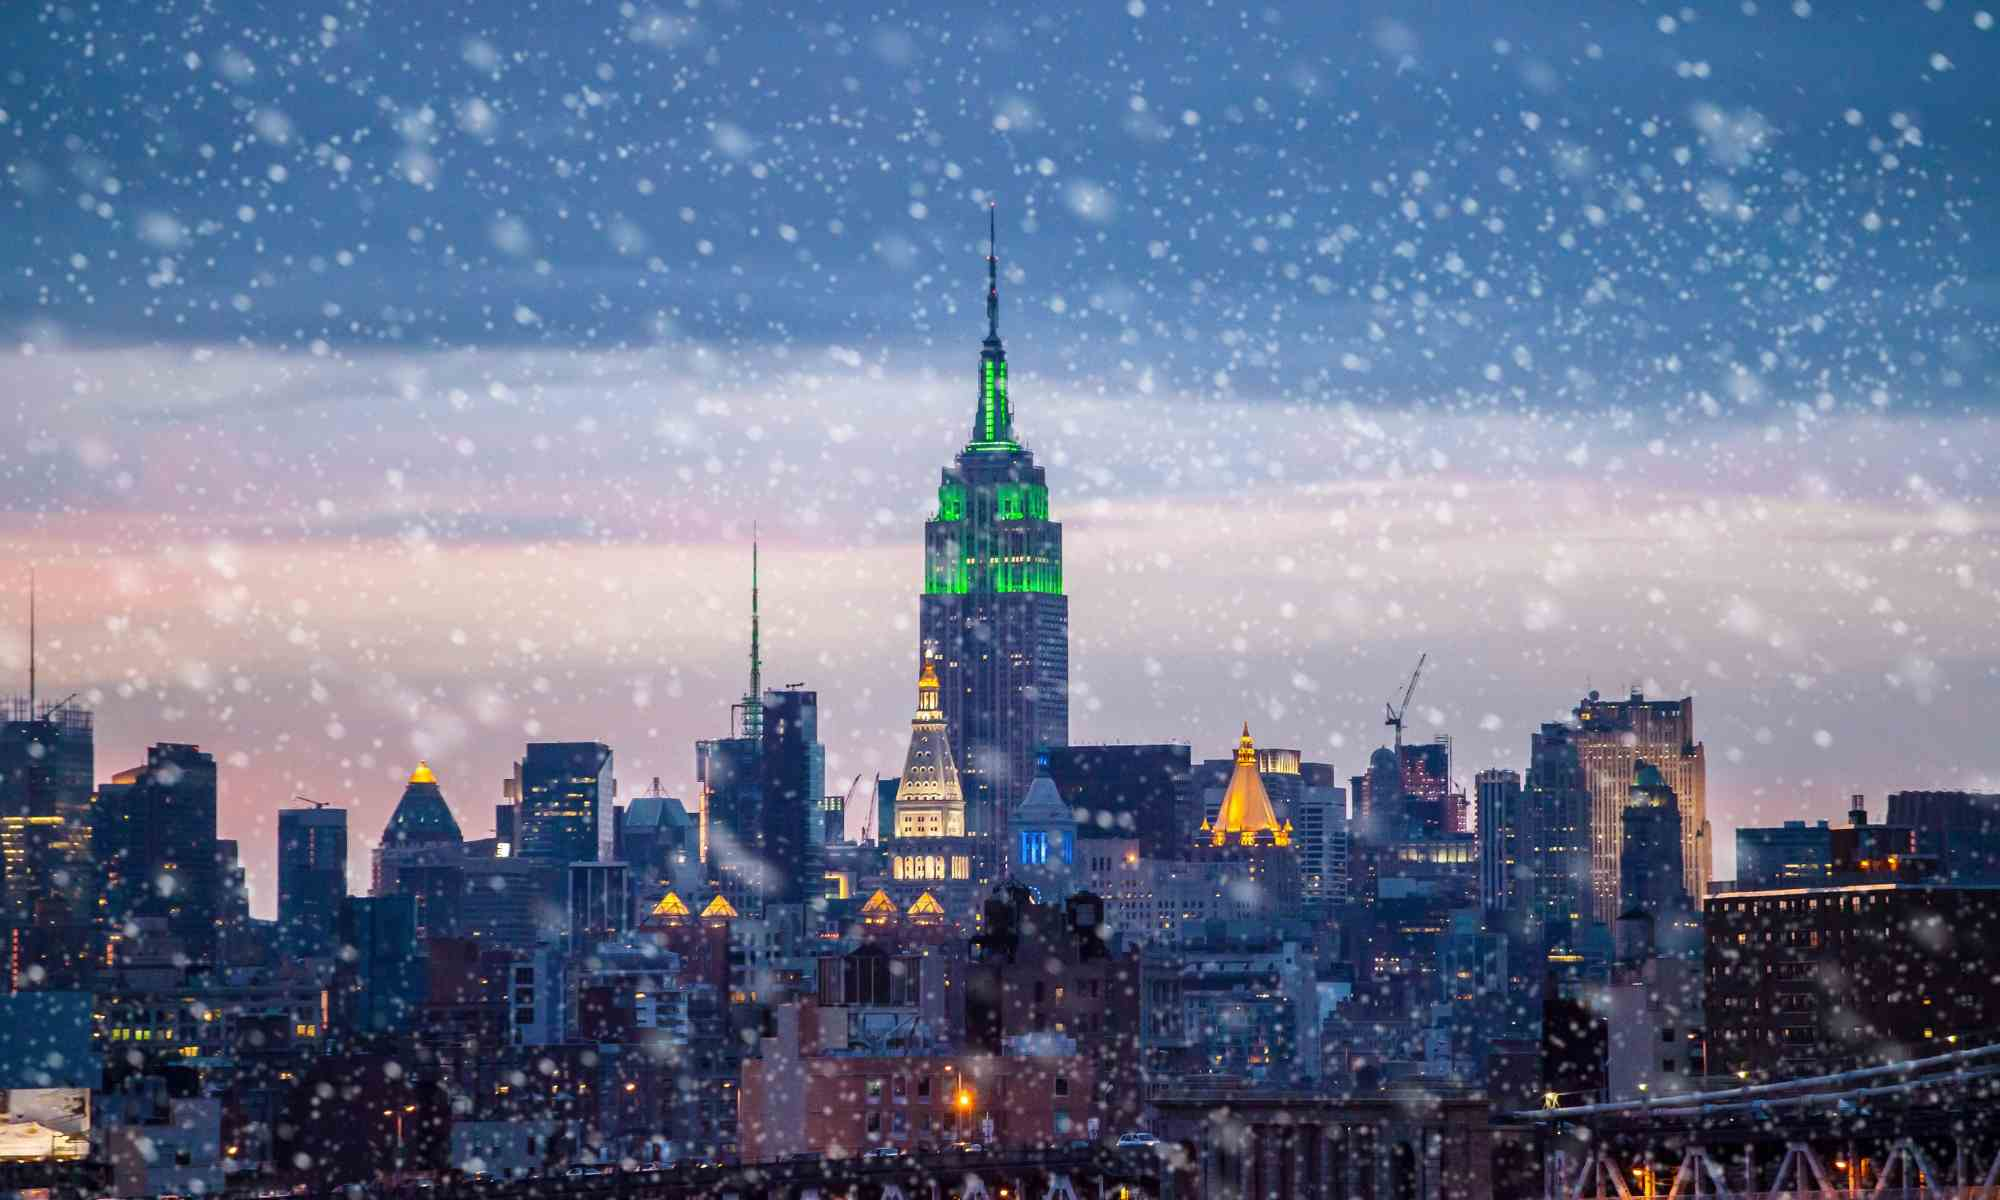 NYC skyline in winter